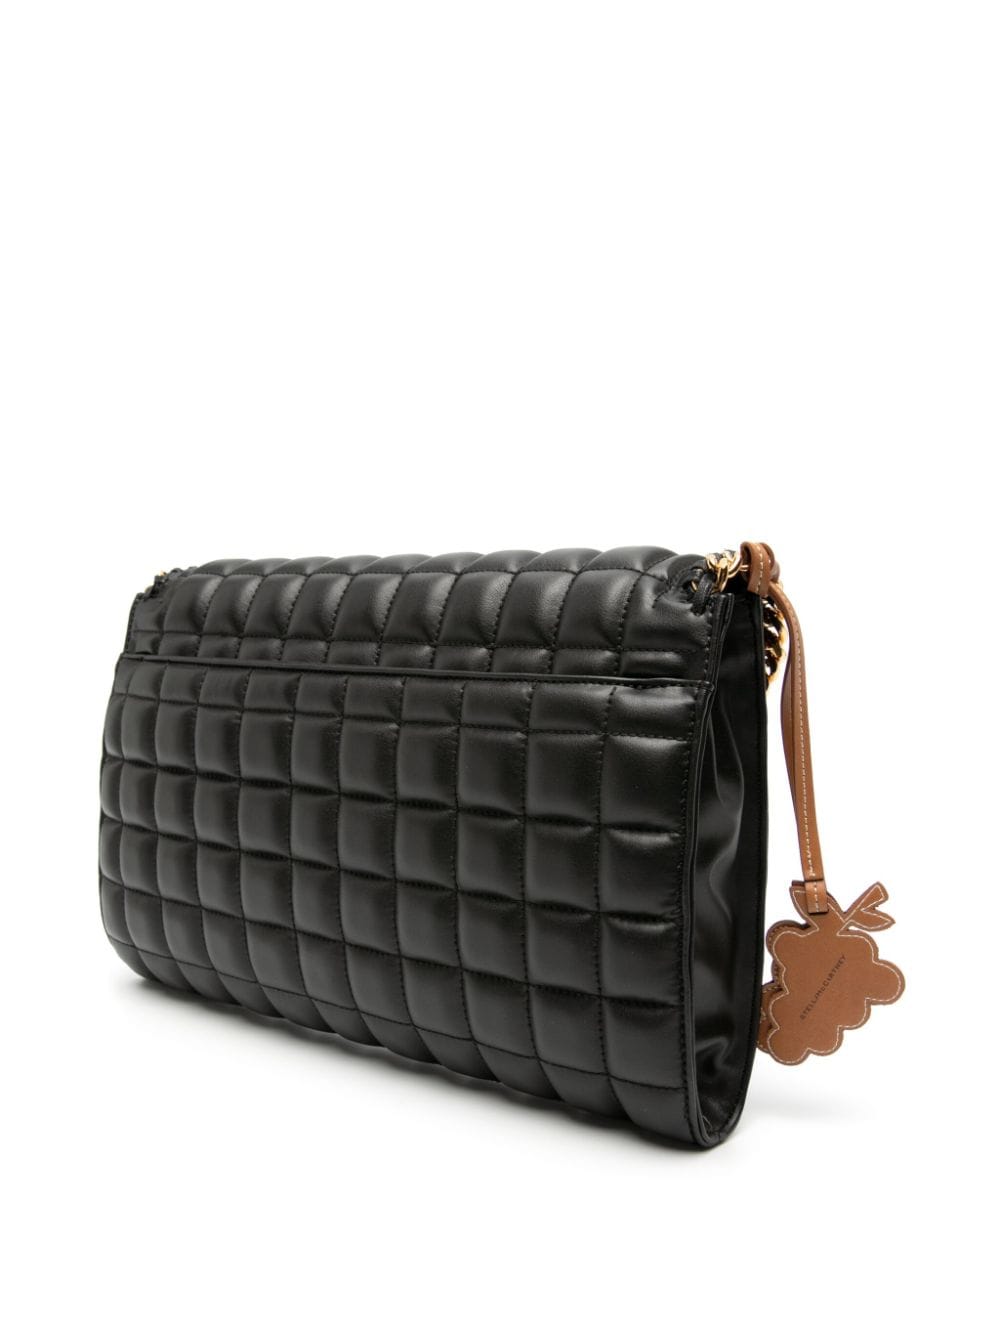 STELLA MCCARTNEY Elegant Black Quilted Shoulder Handbag for Women - Sustainable Materials